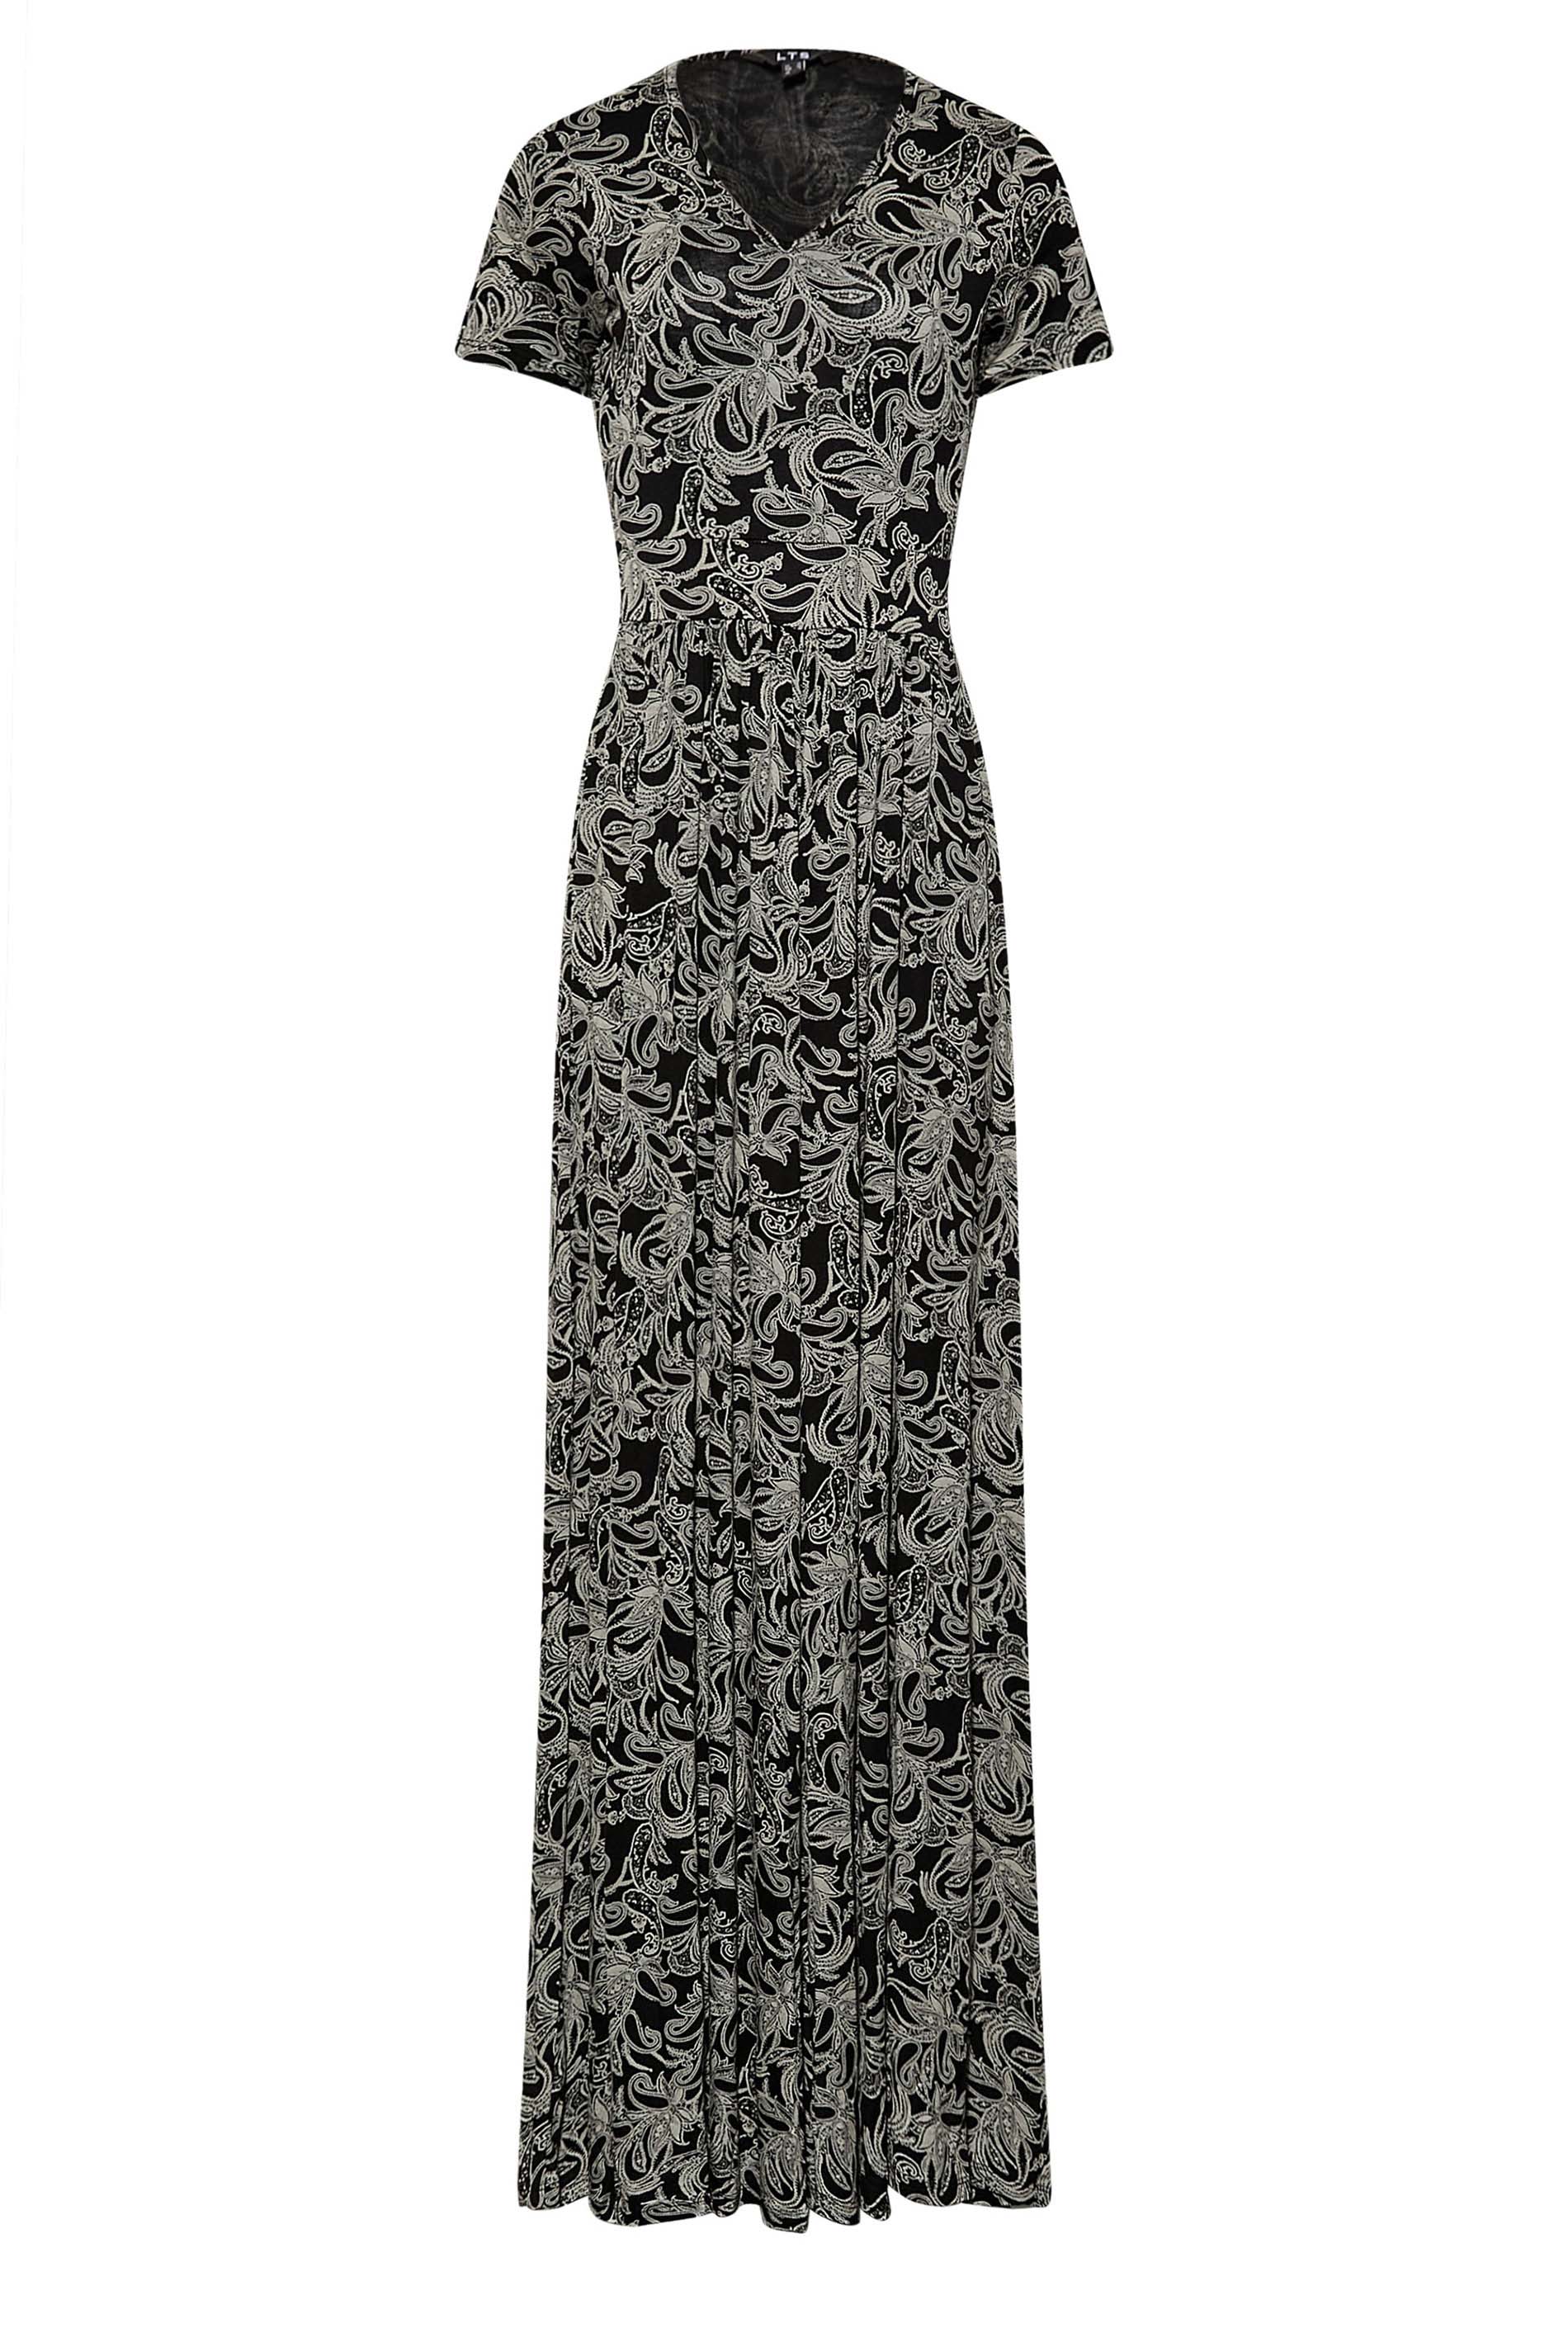 LTS Tall Women's Black Paisley Print Maxi Dress | Long Tall Sally